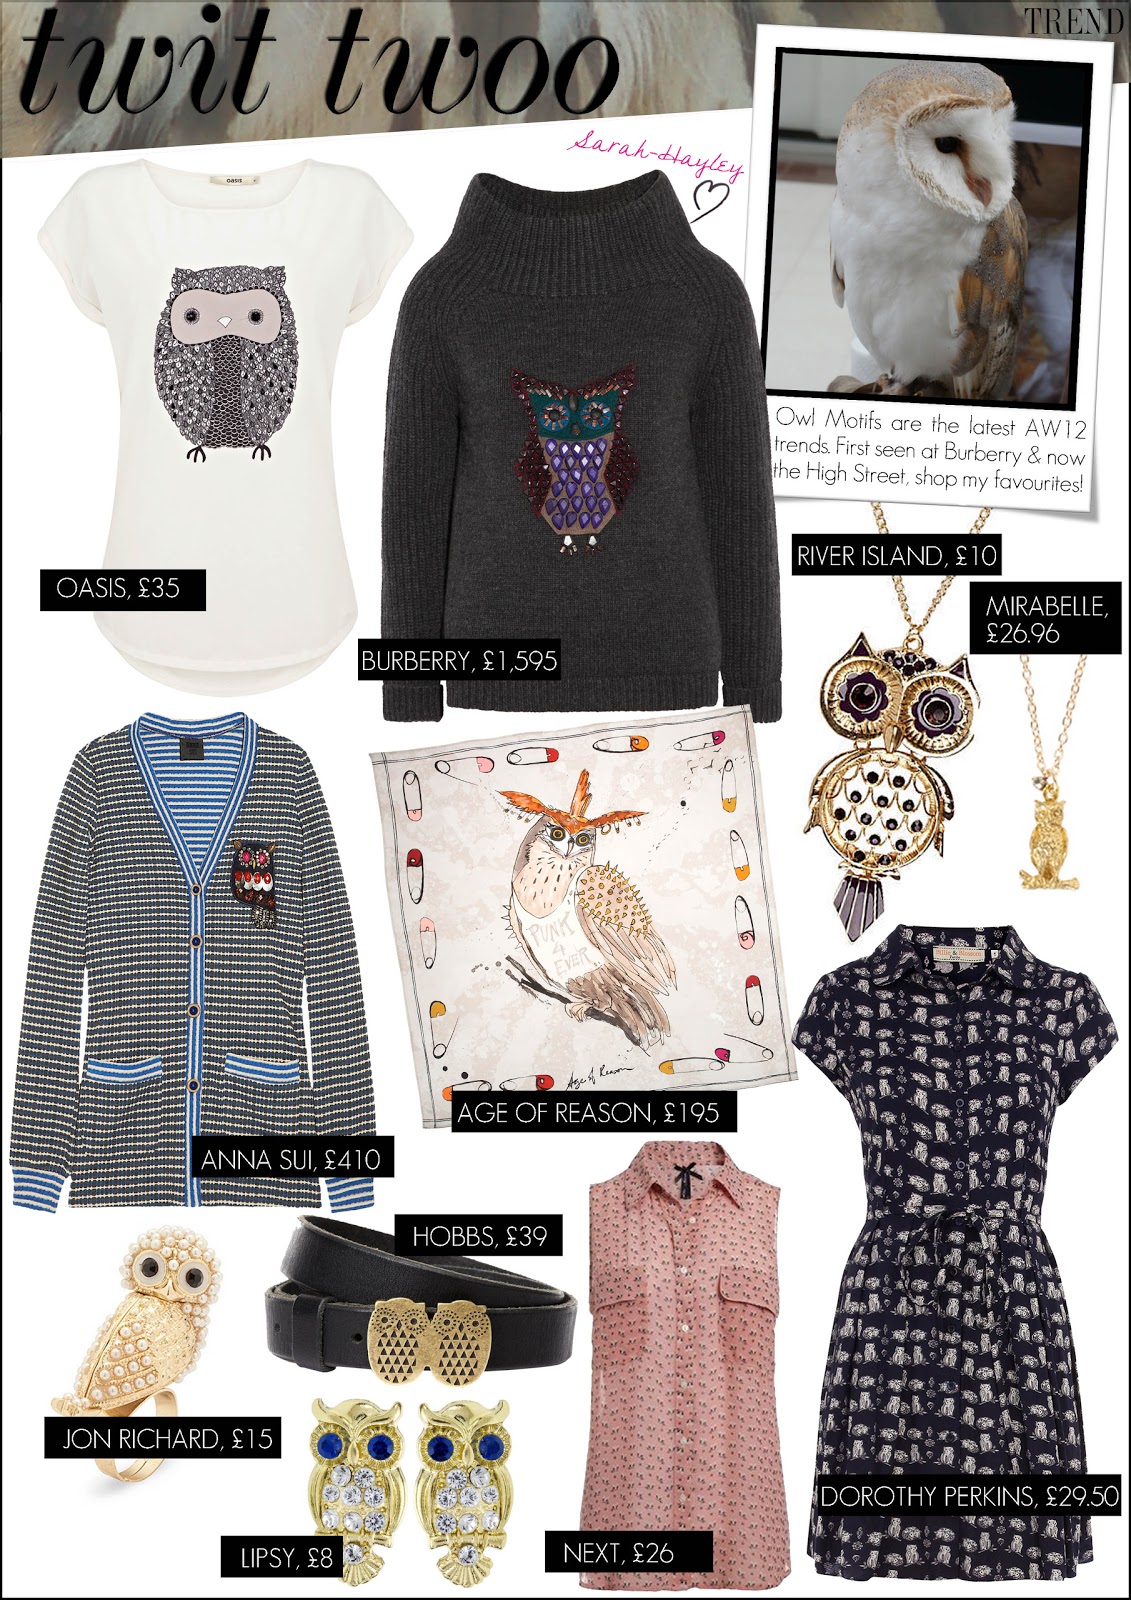 AW12 Trend - Burberry's Owl Motif - by Sarah-Hayley Owen